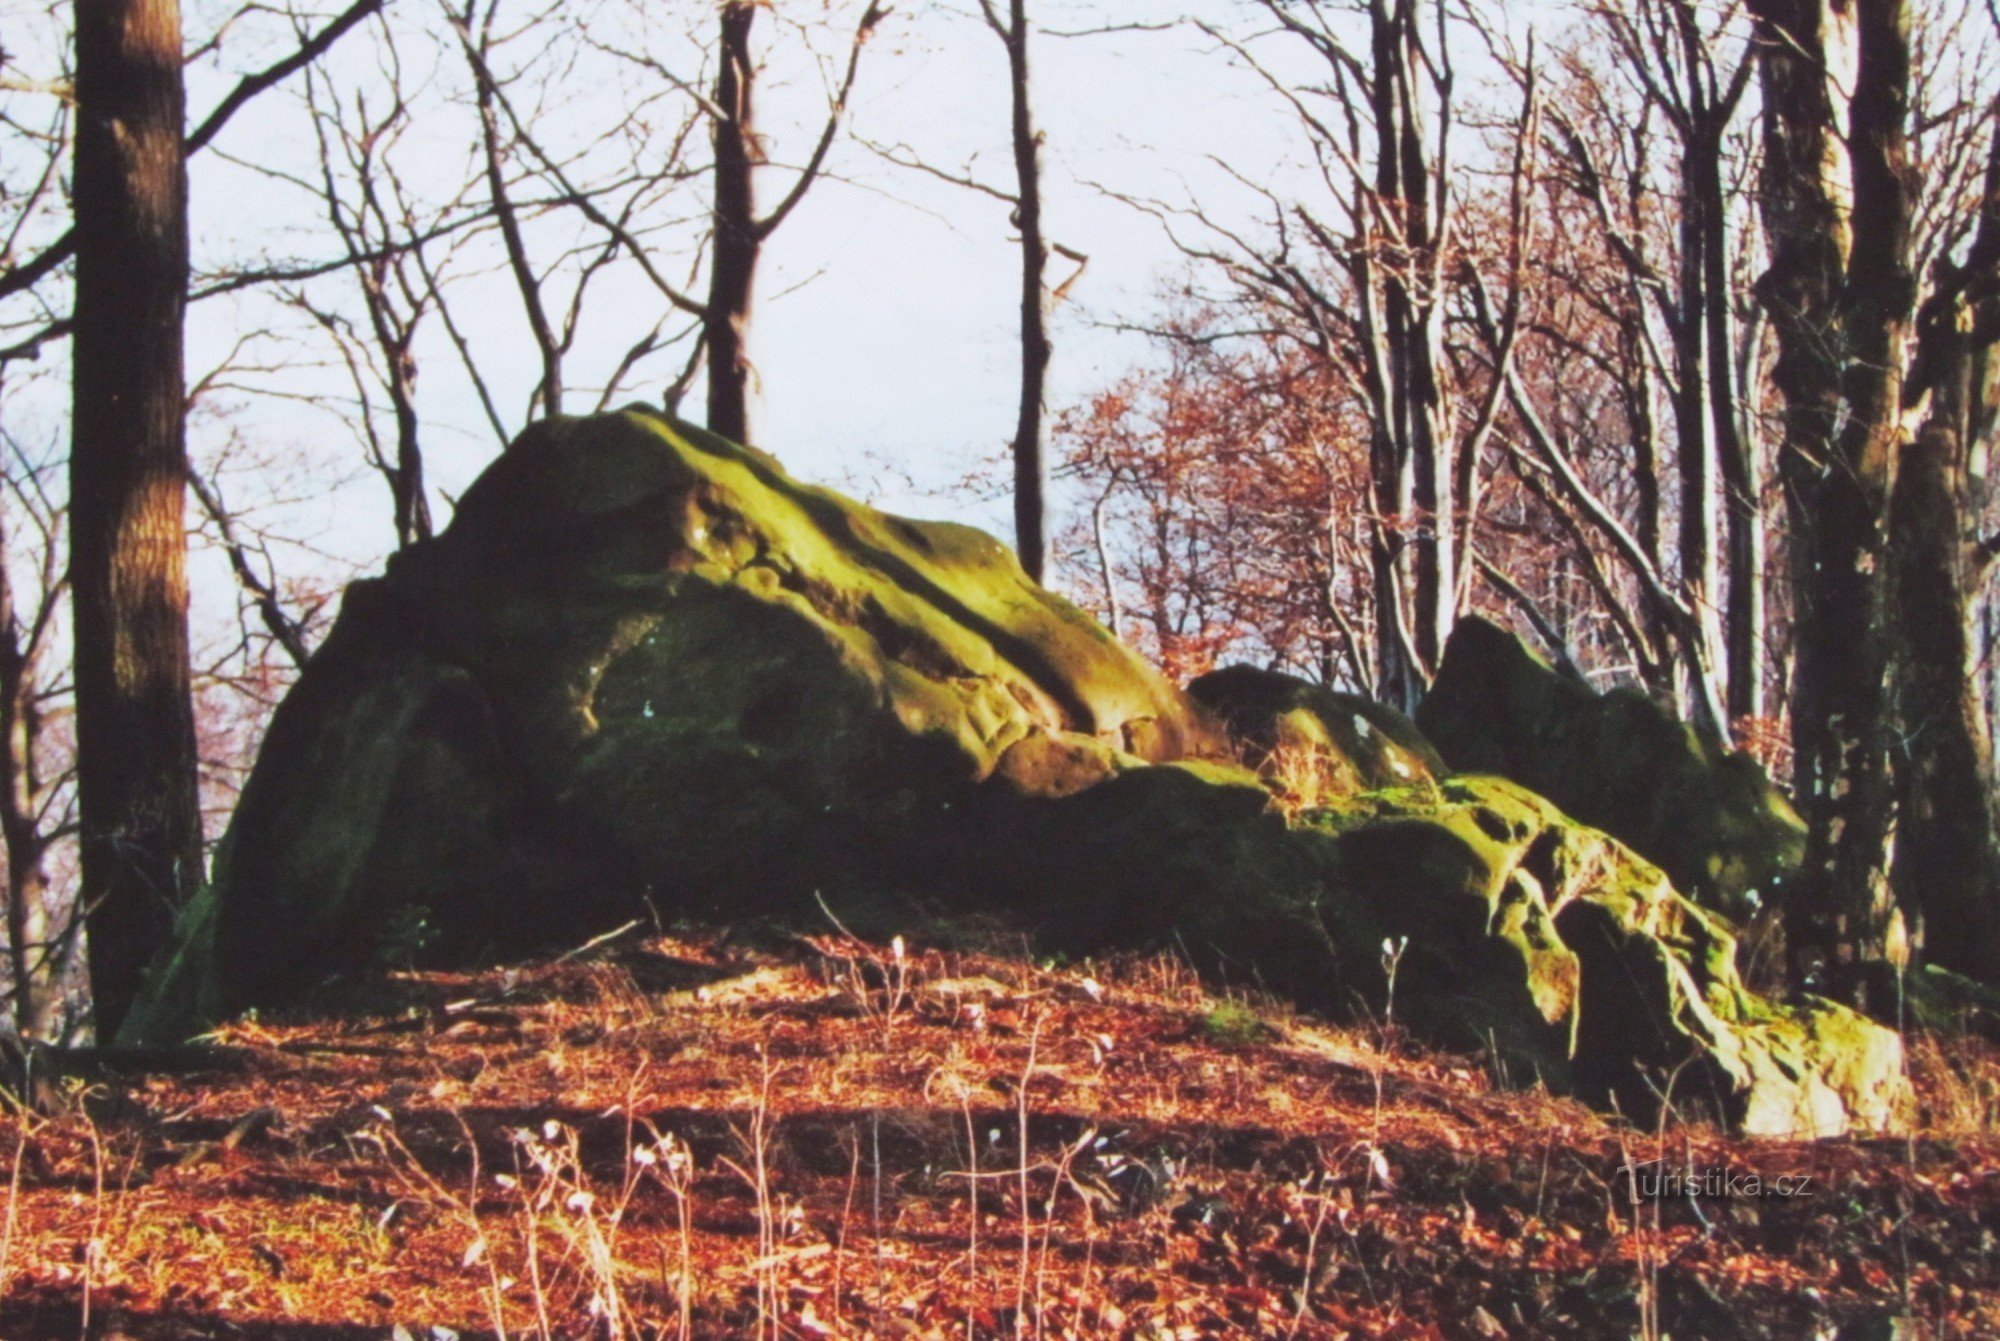 Obřan peak - rocks and castle ruins